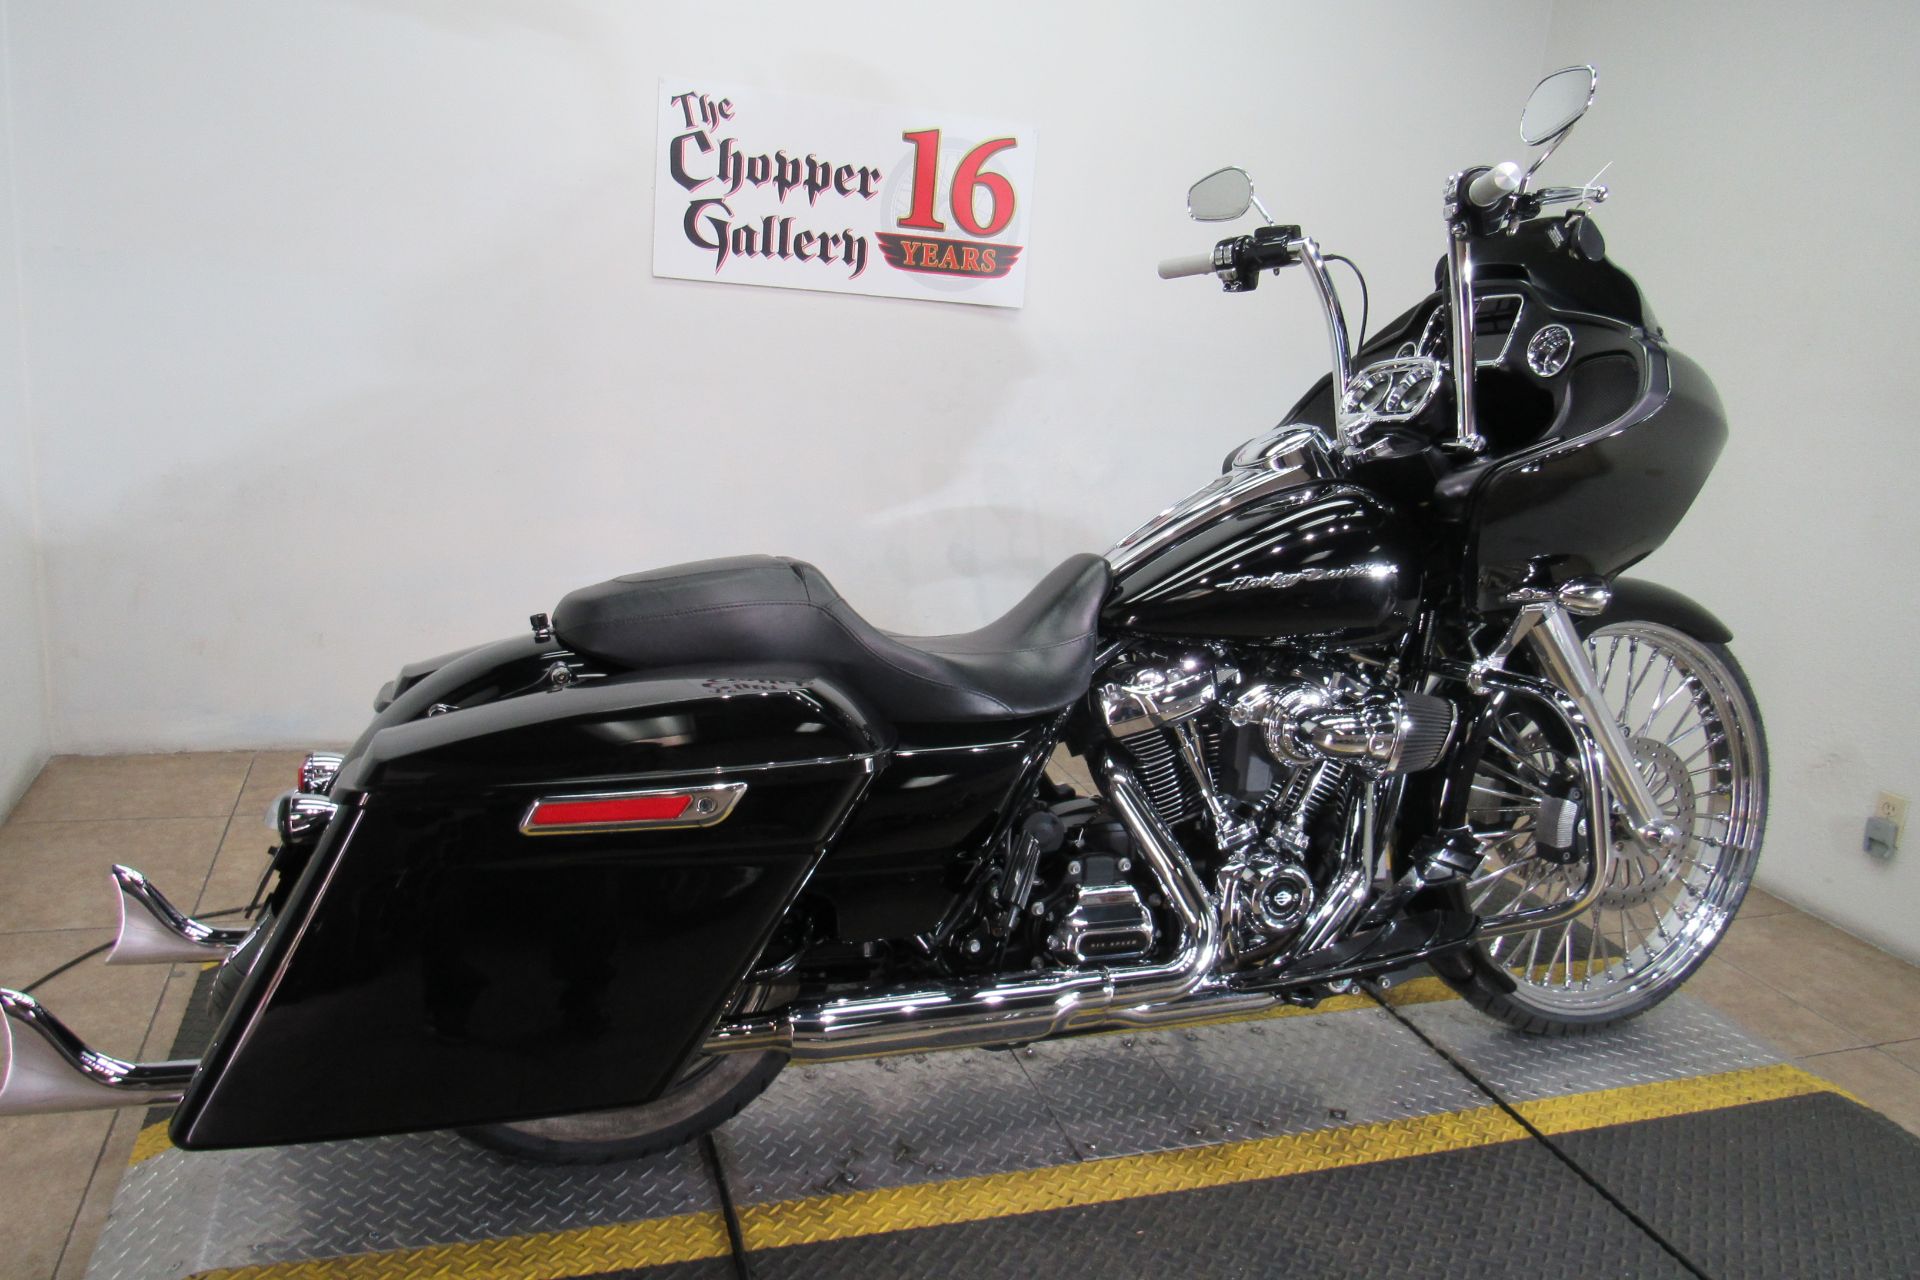 2020 Harley-Davidson Road Glide® in Temecula, California - Photo 8